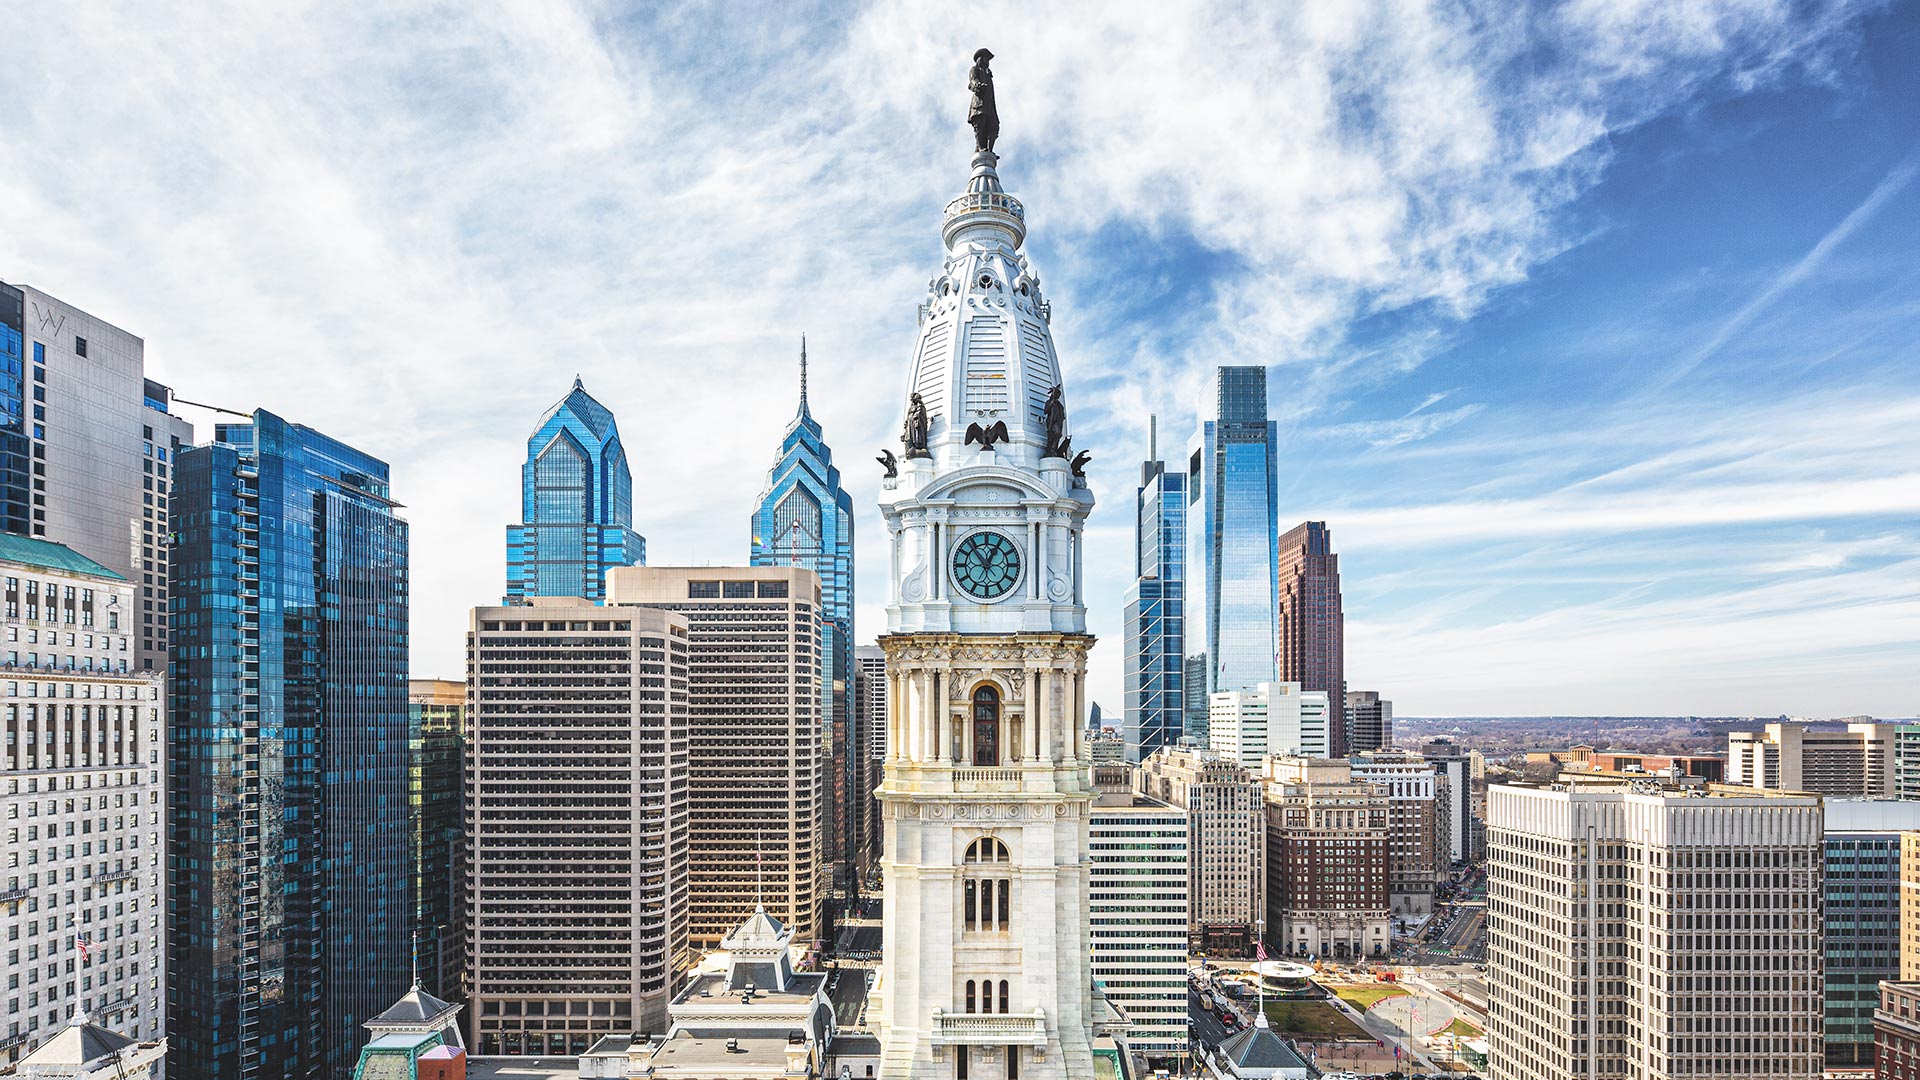 Skyline view of city hall in Philadelphia